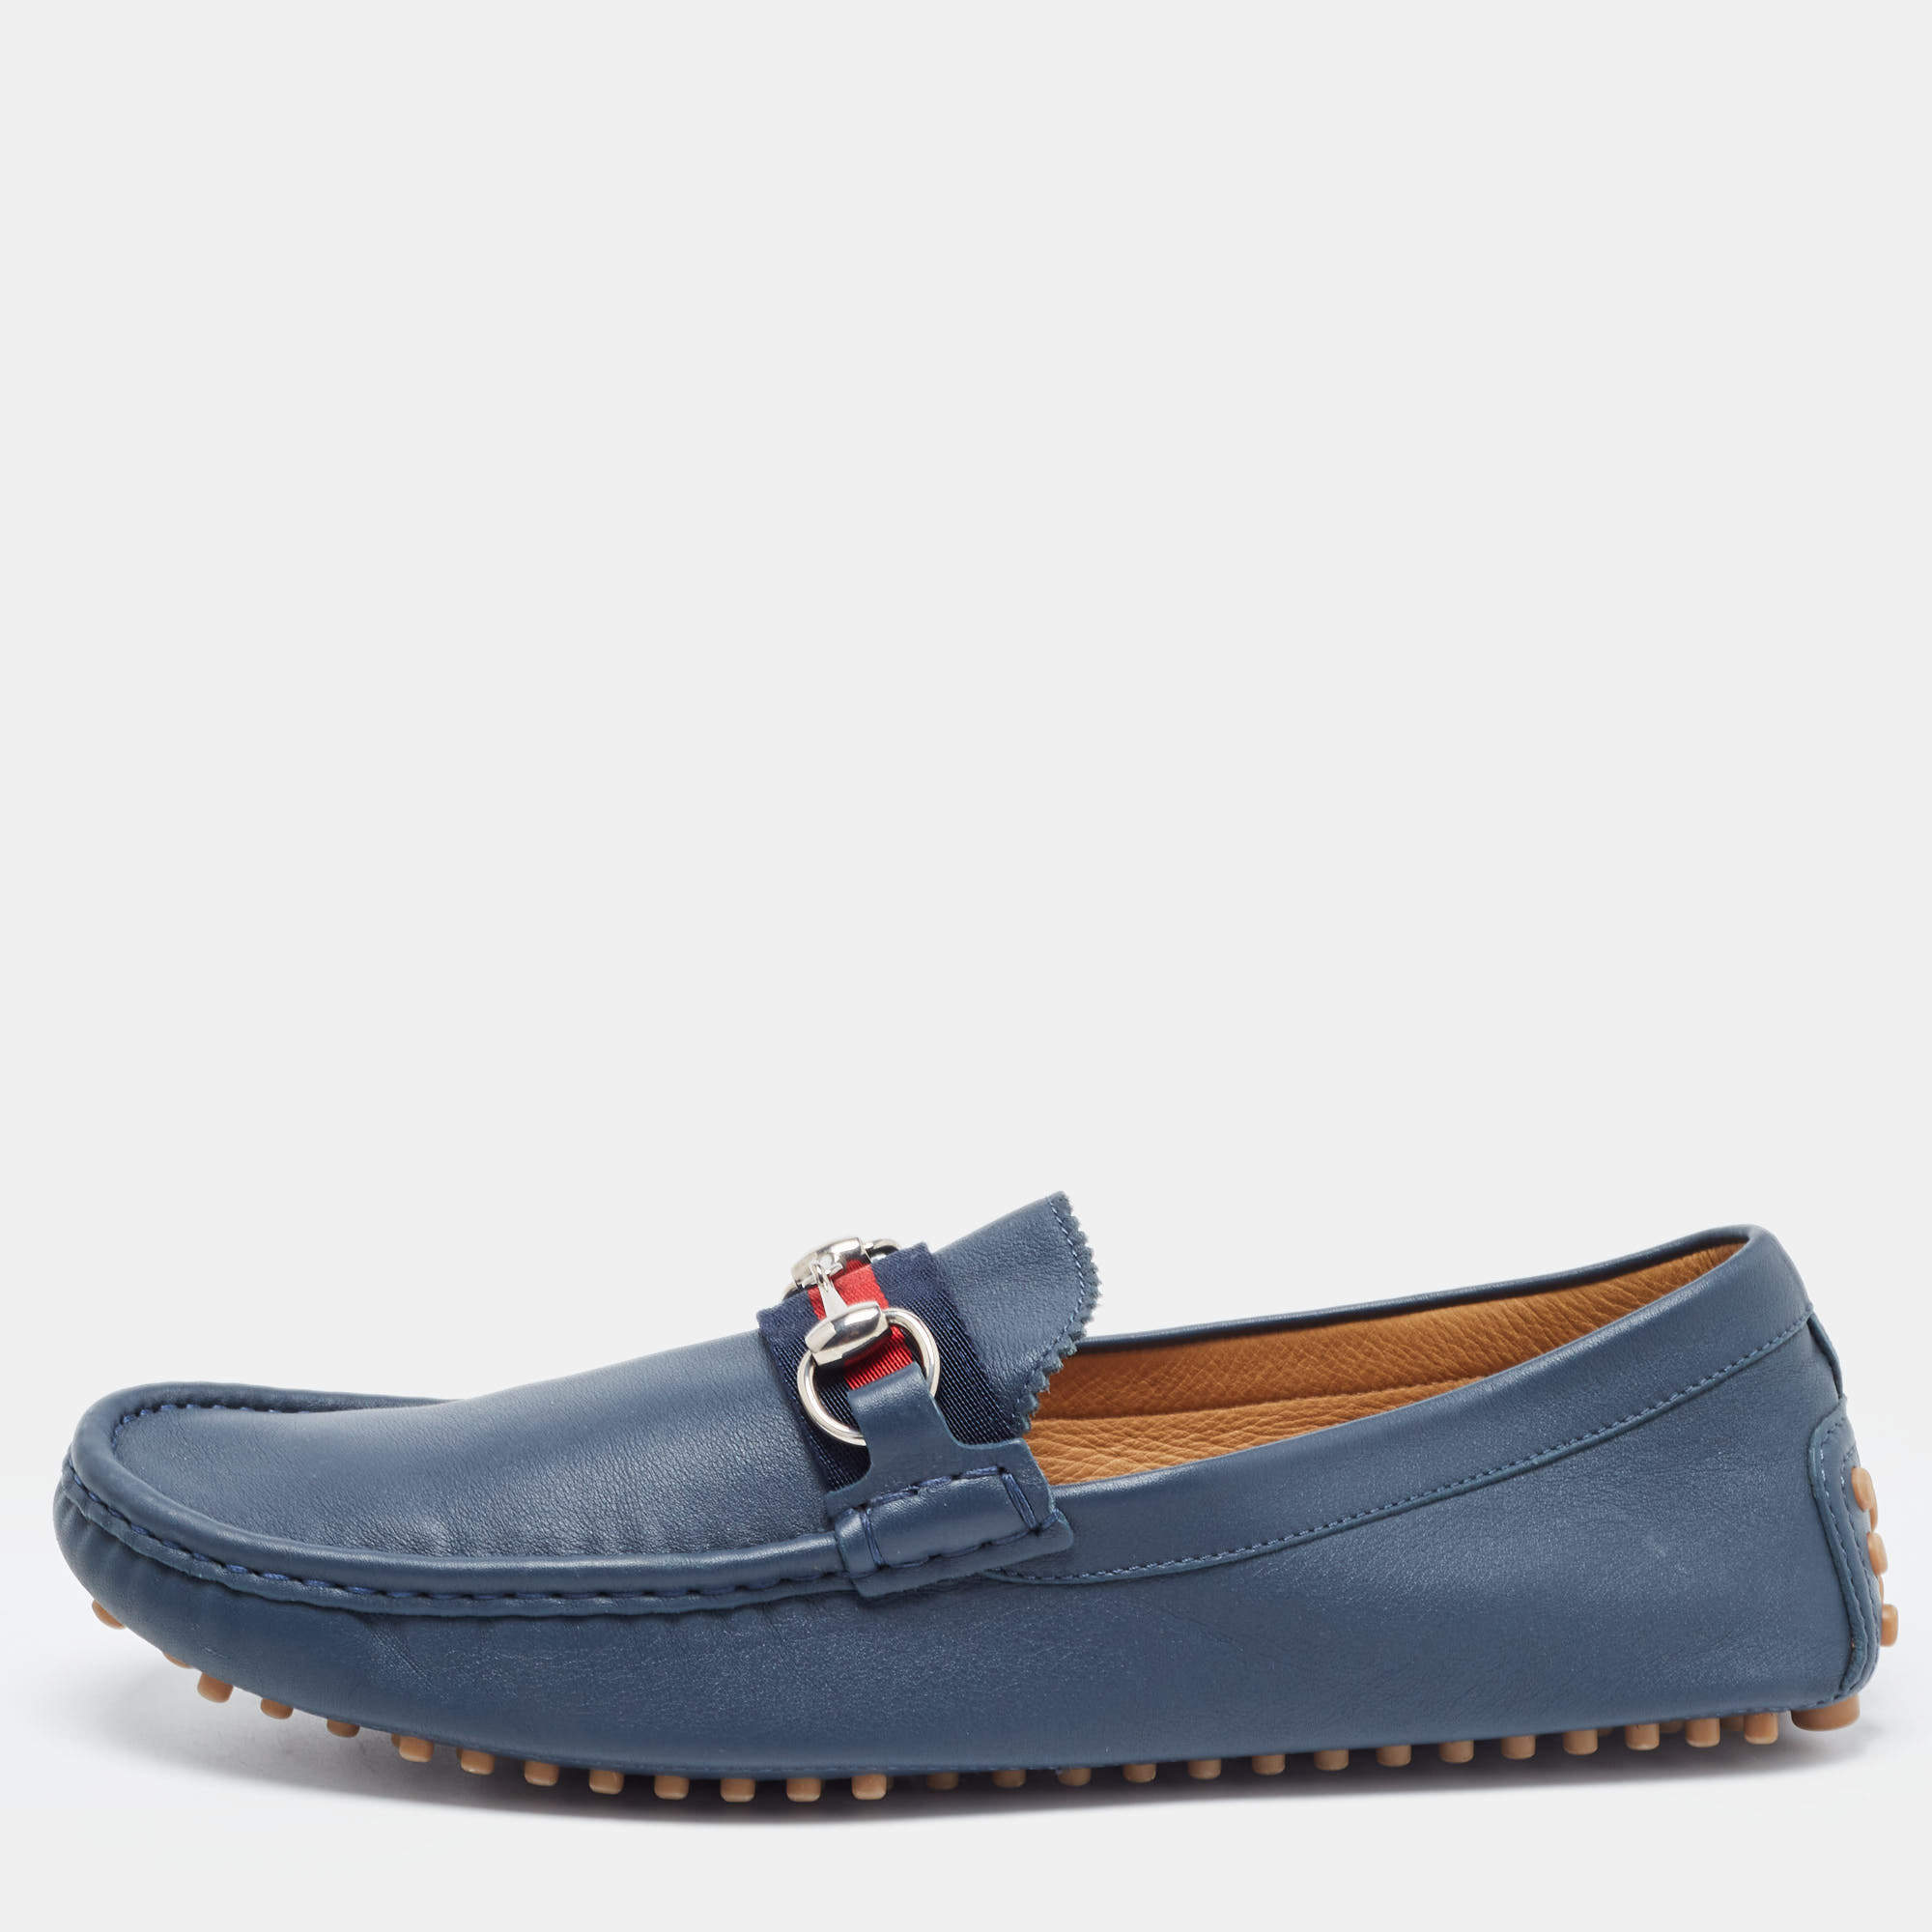 Louis Vuitton - Hockenheim Driving Shoes - Loafers - Size: Shoes / EU 42.5  in Turkey